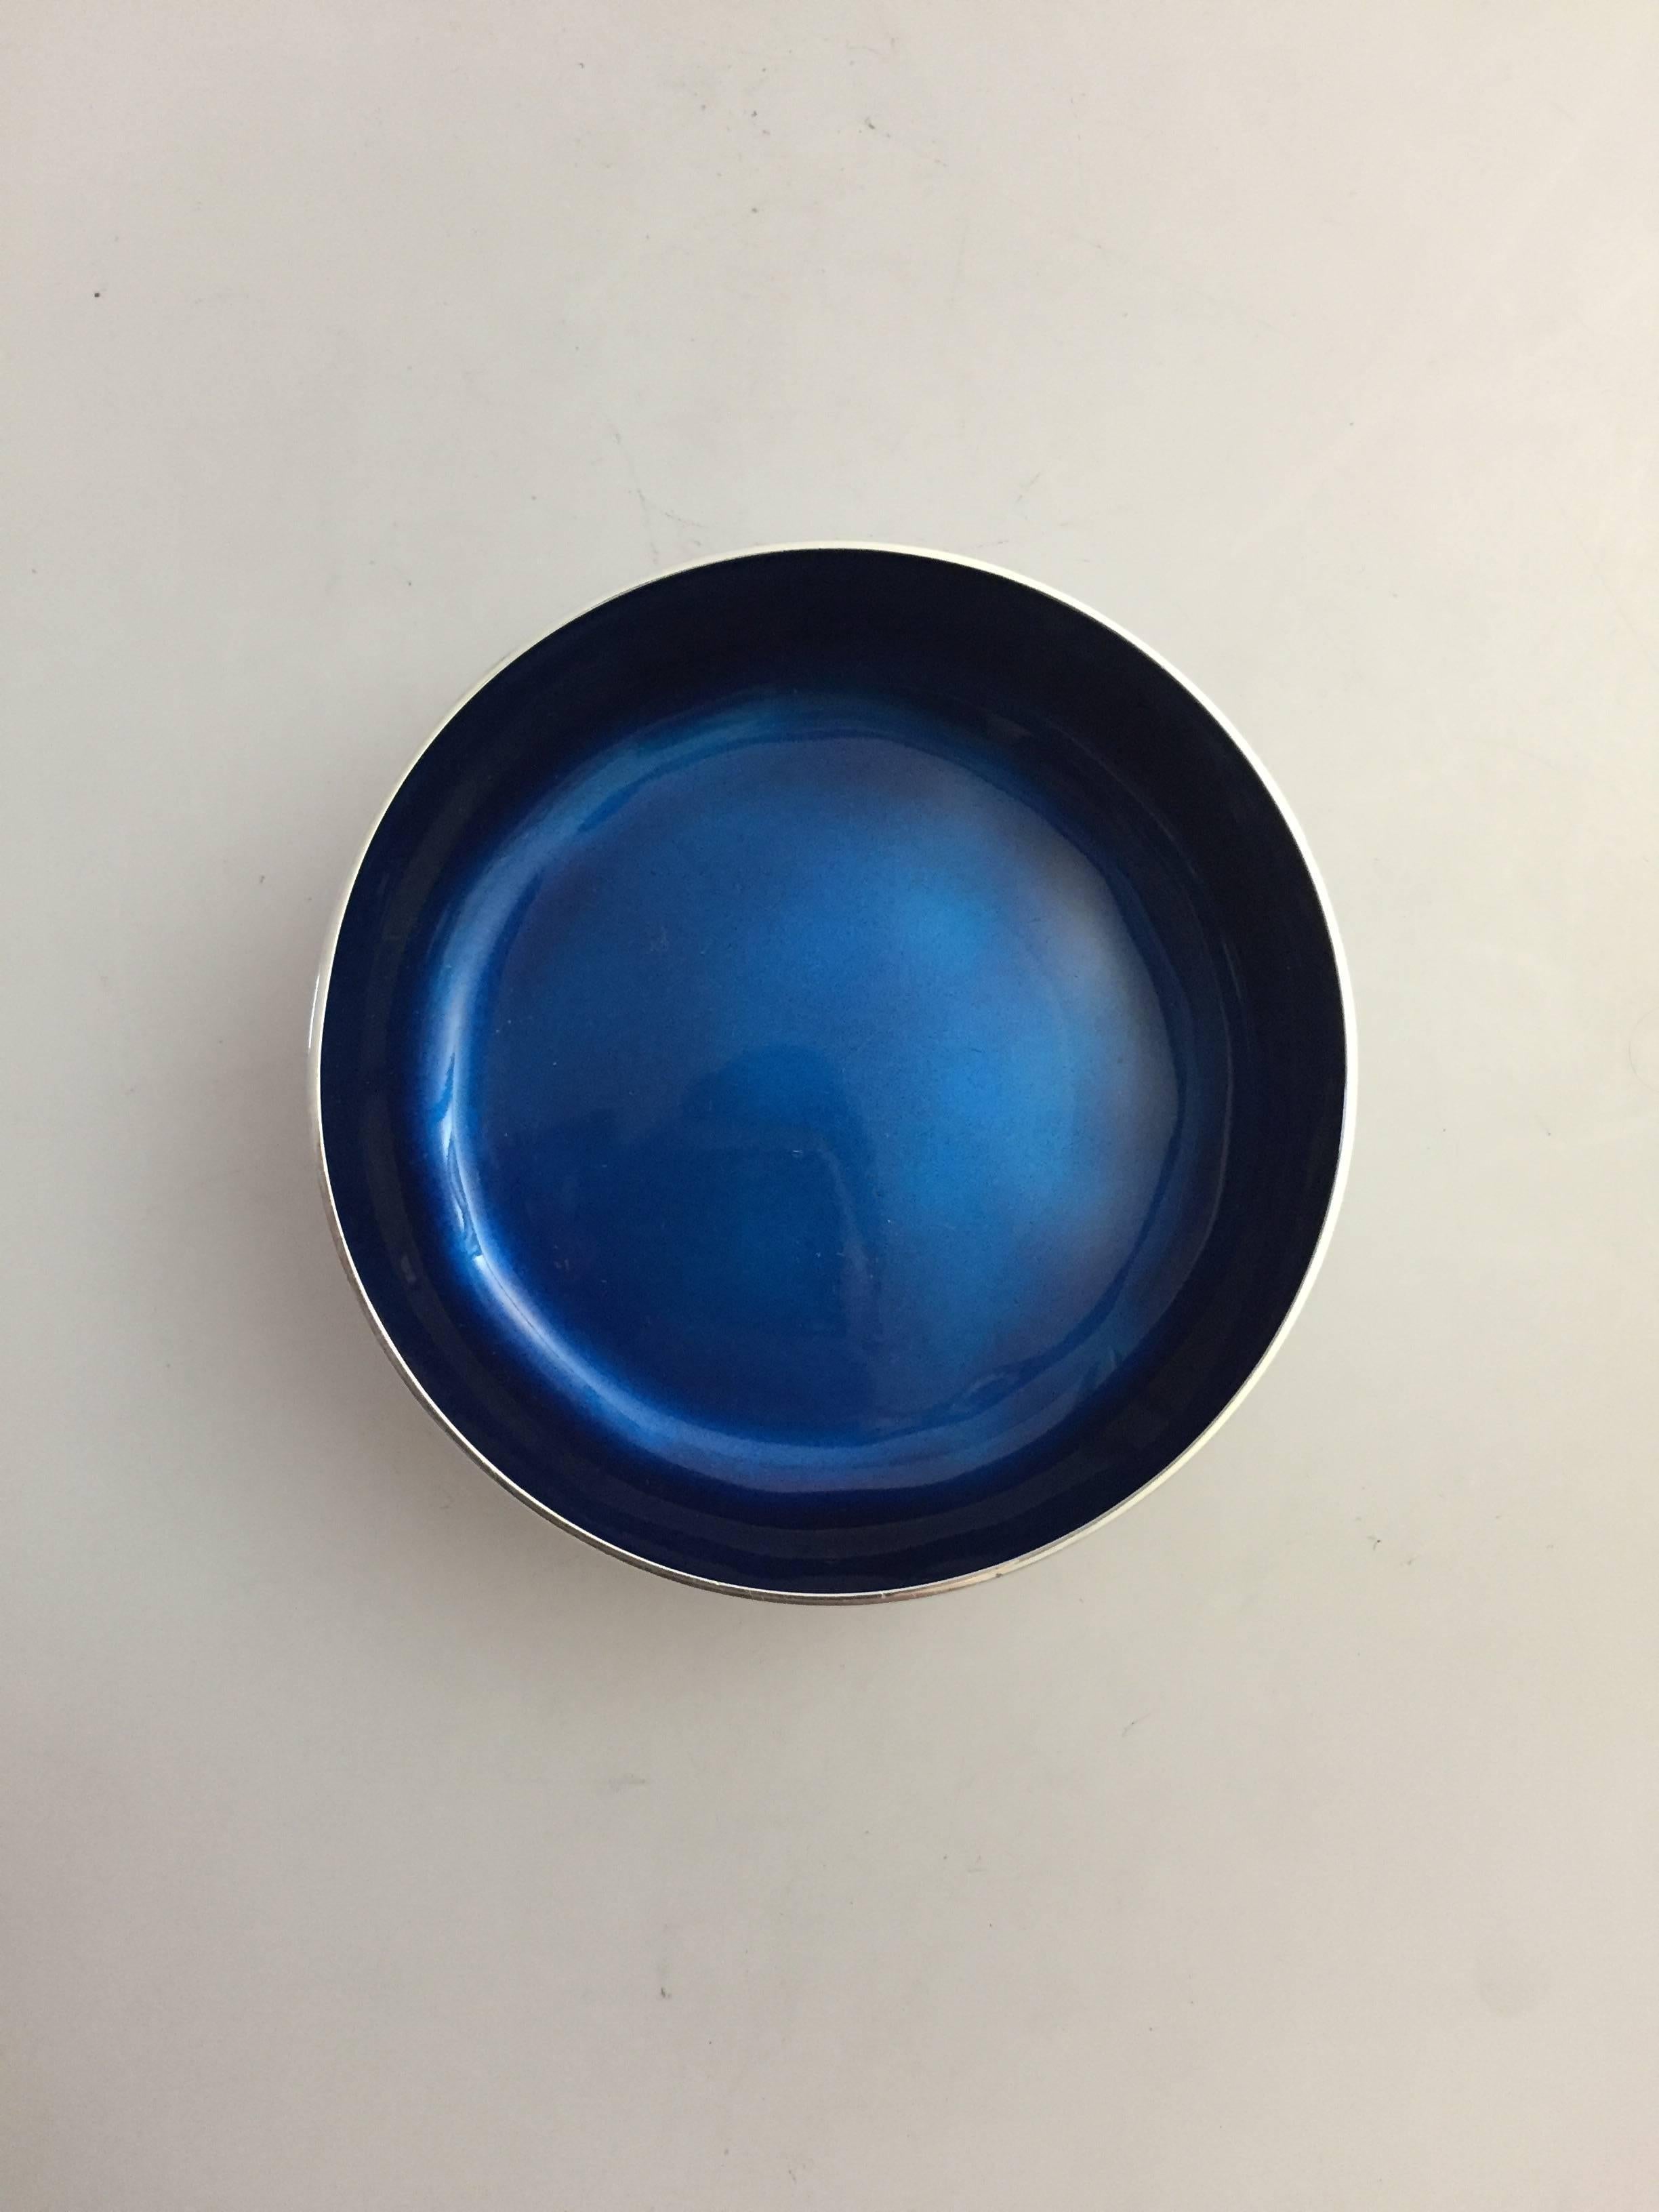 Georg Jensen sterling silver Henning Koppel blue enamel bowl #1158. 

Measures: 8 cm in diameter, 3 cm H.